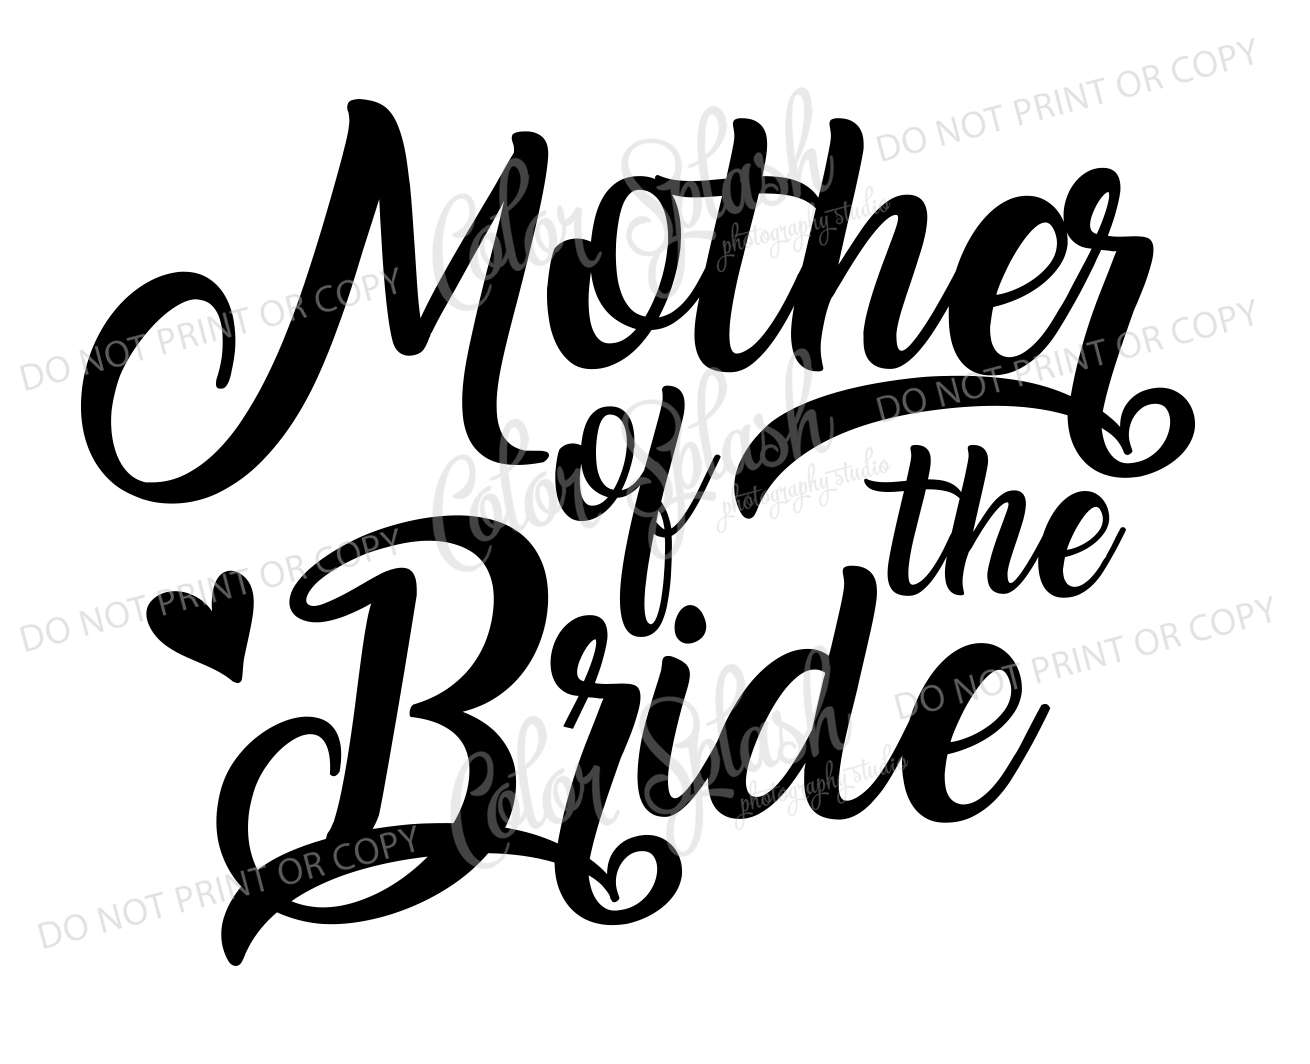 bride clipart logo